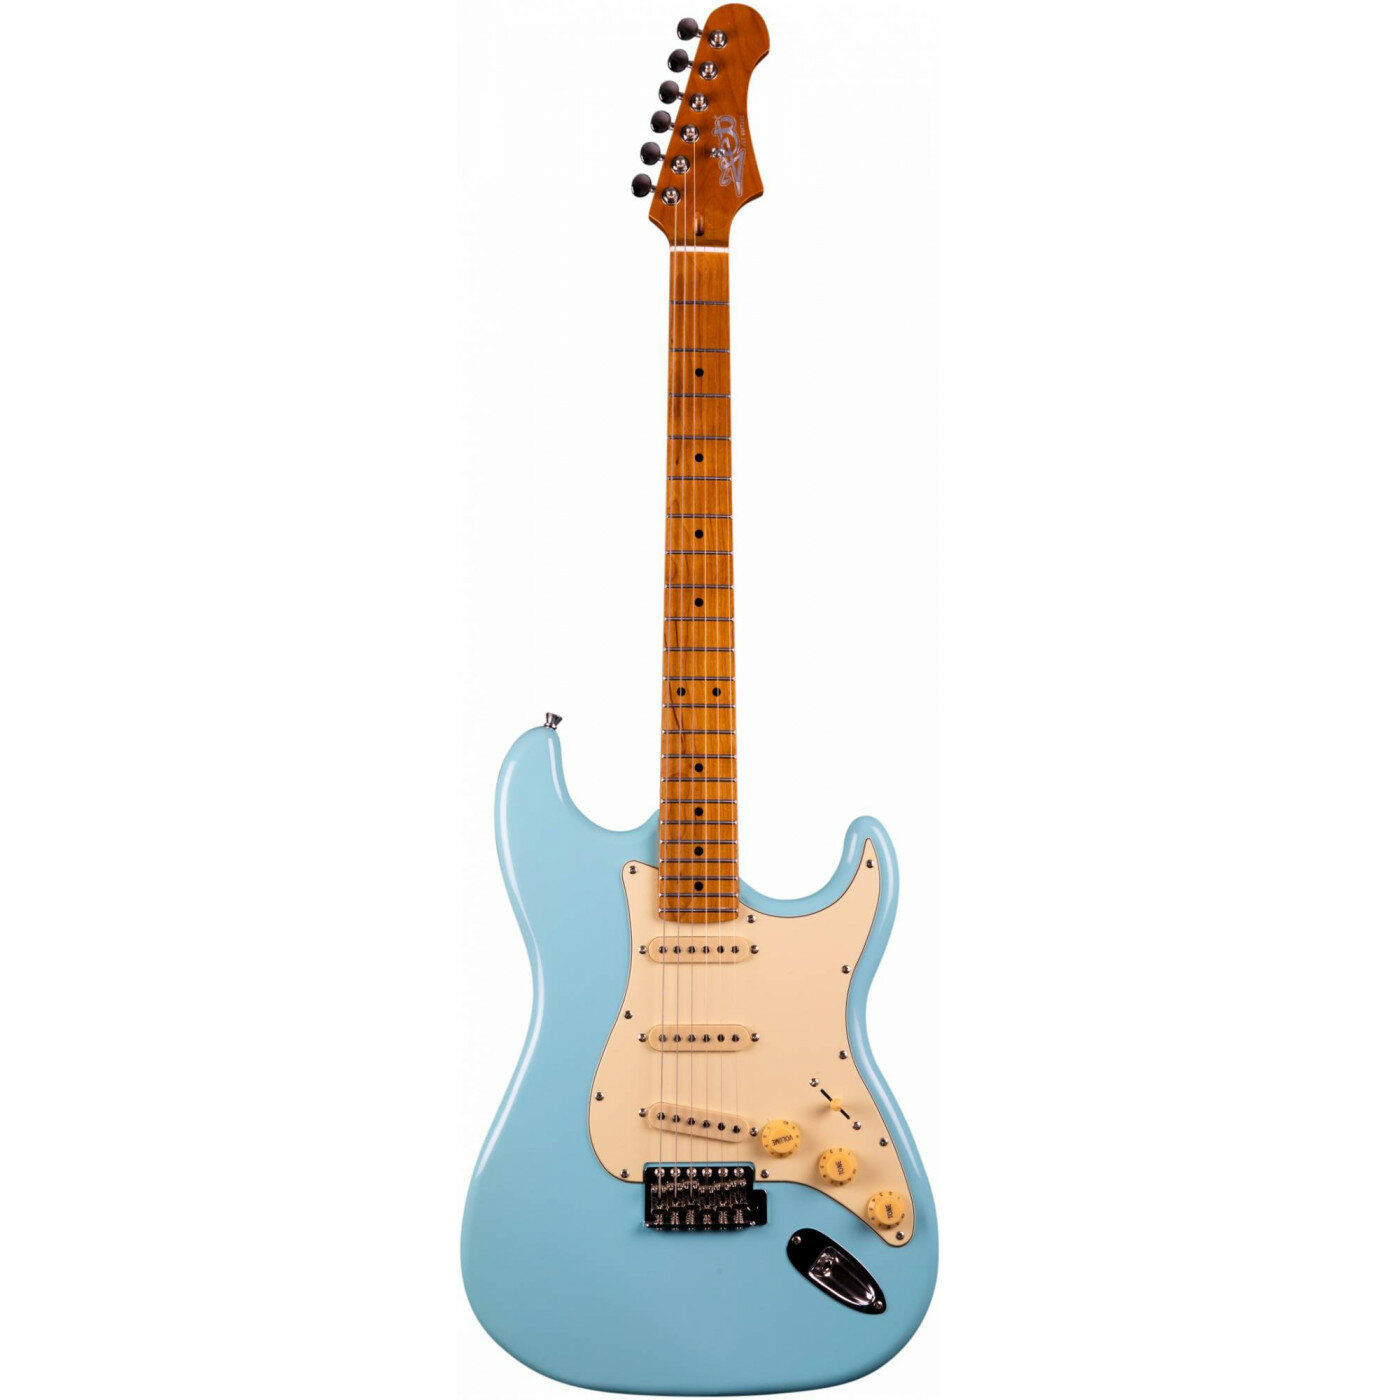 JET JS-300 BL электрогитара Stratocaster корпус липа 22 лада SSS tremolo цвет Sonic blue